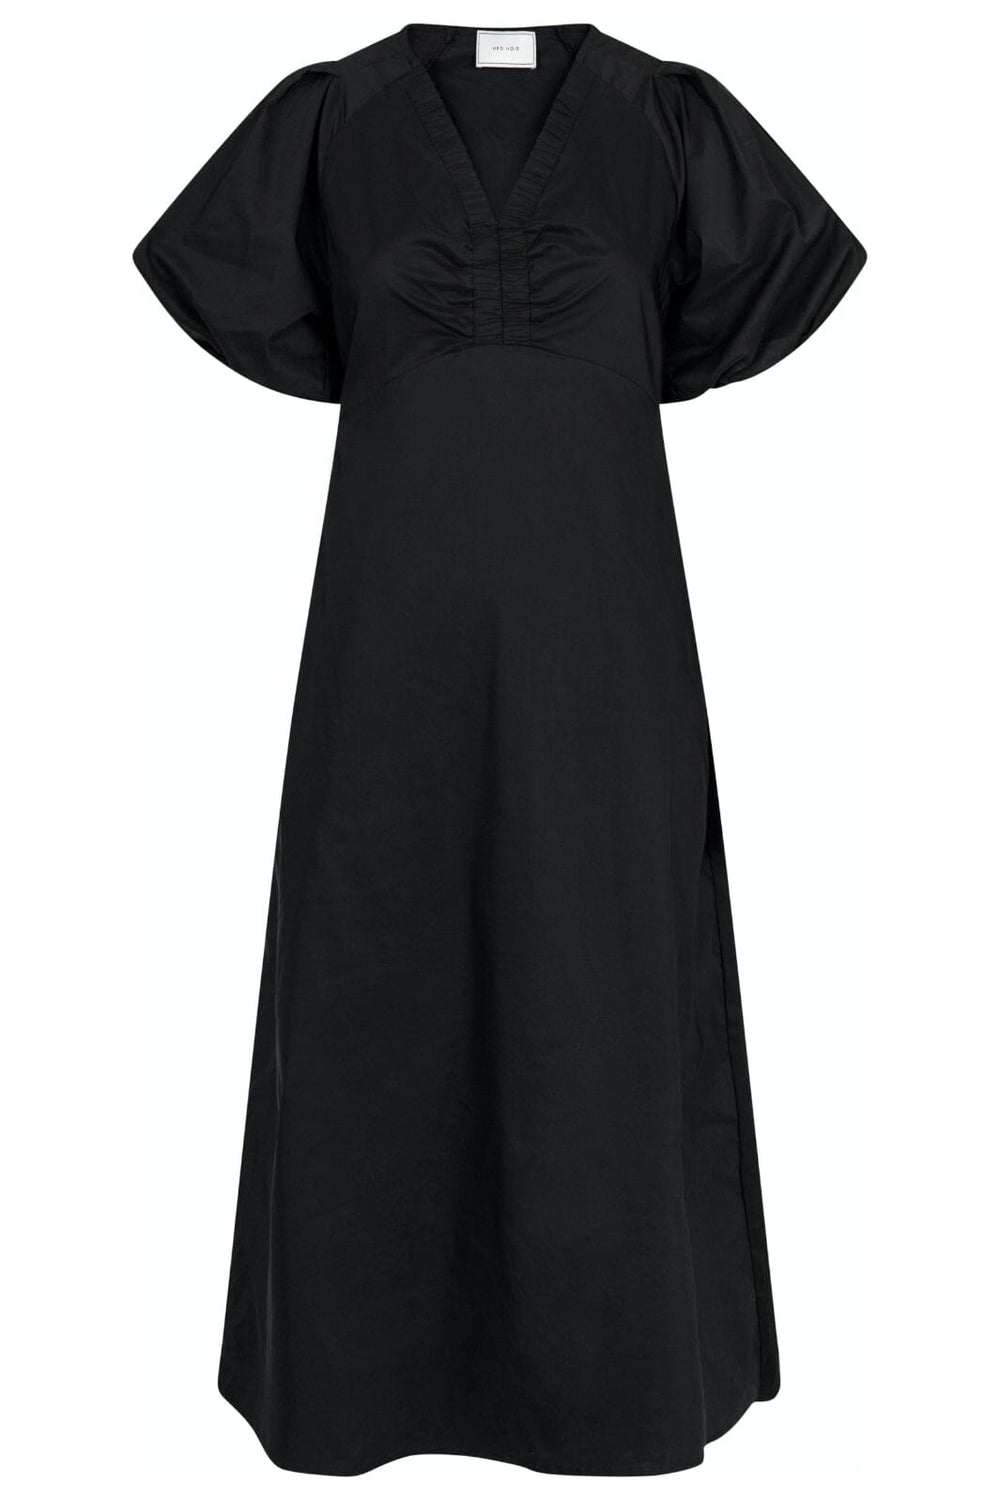 Neo Noir - Illana Poplin Dress - Black Kjoler 